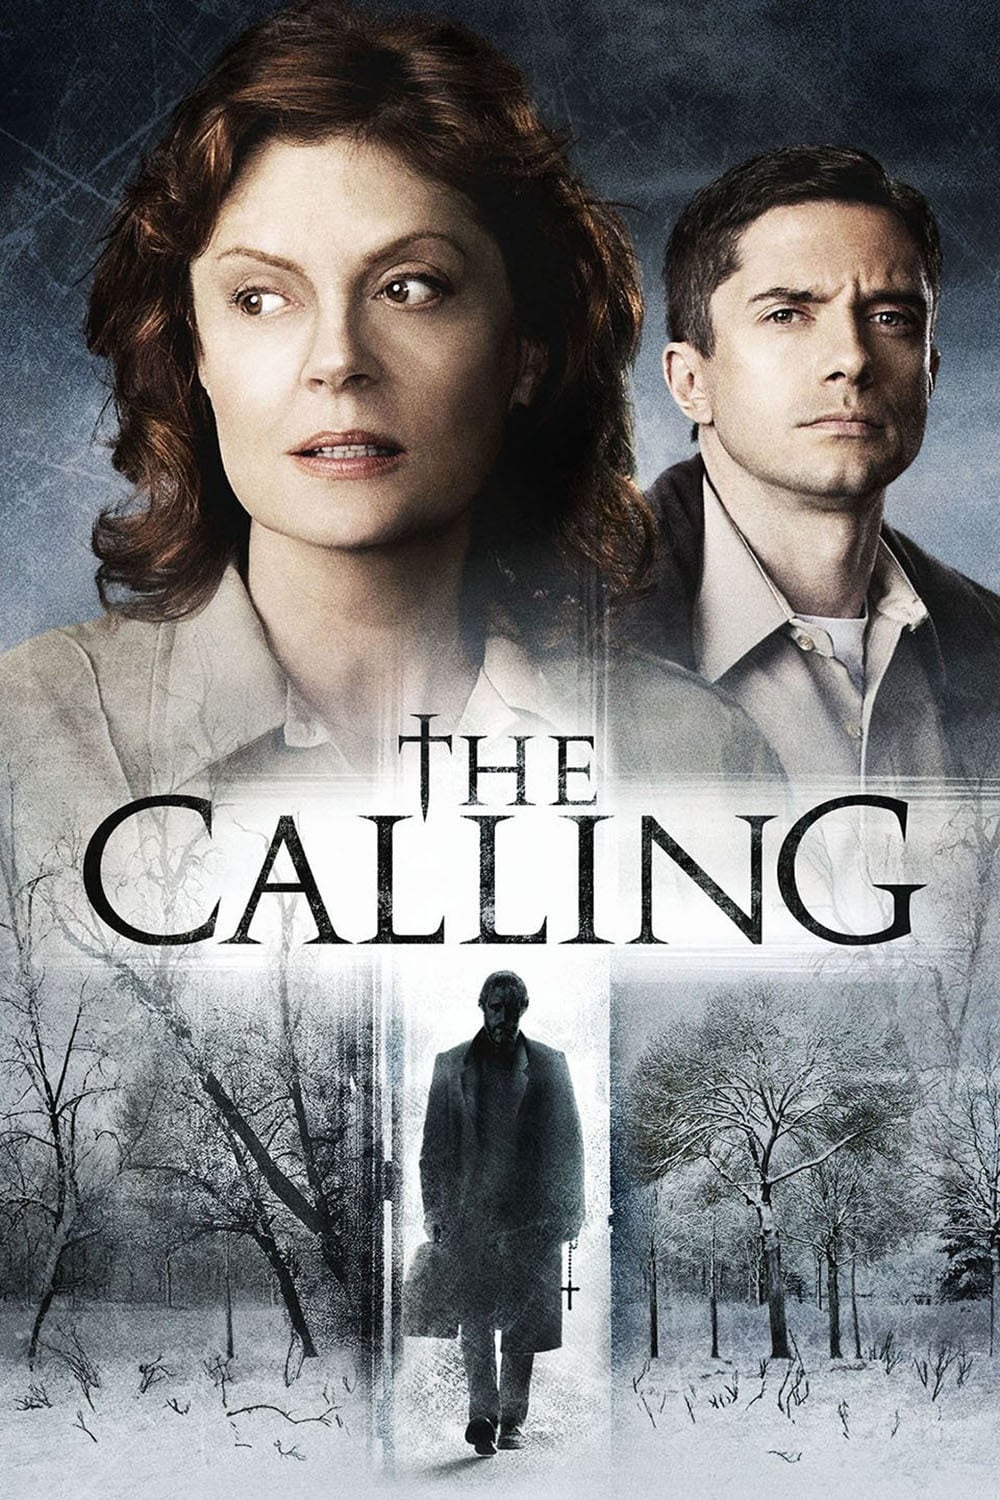 The Calling - Ruf des Bösen